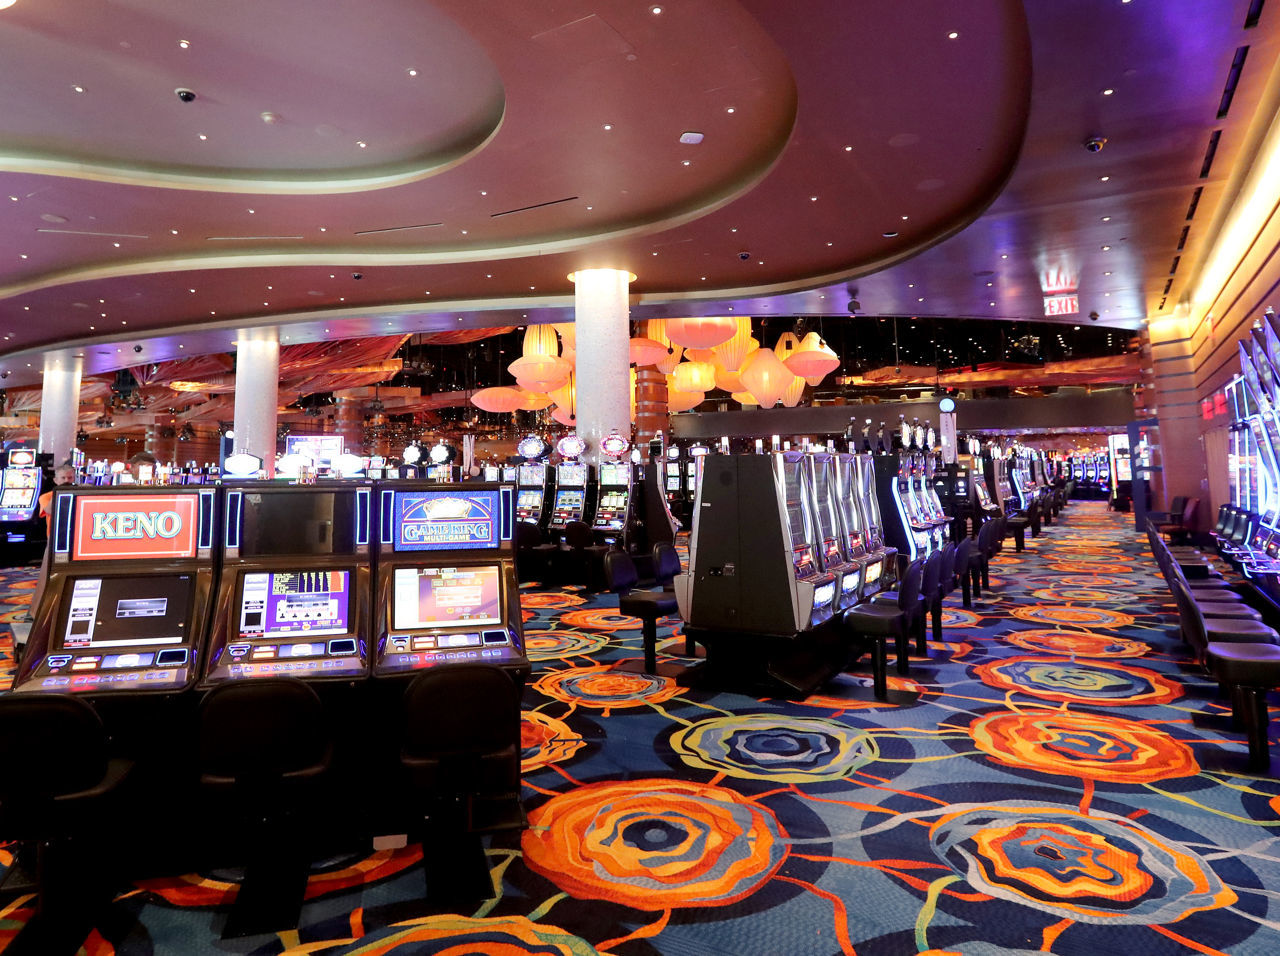 ocean resort casino bonus online